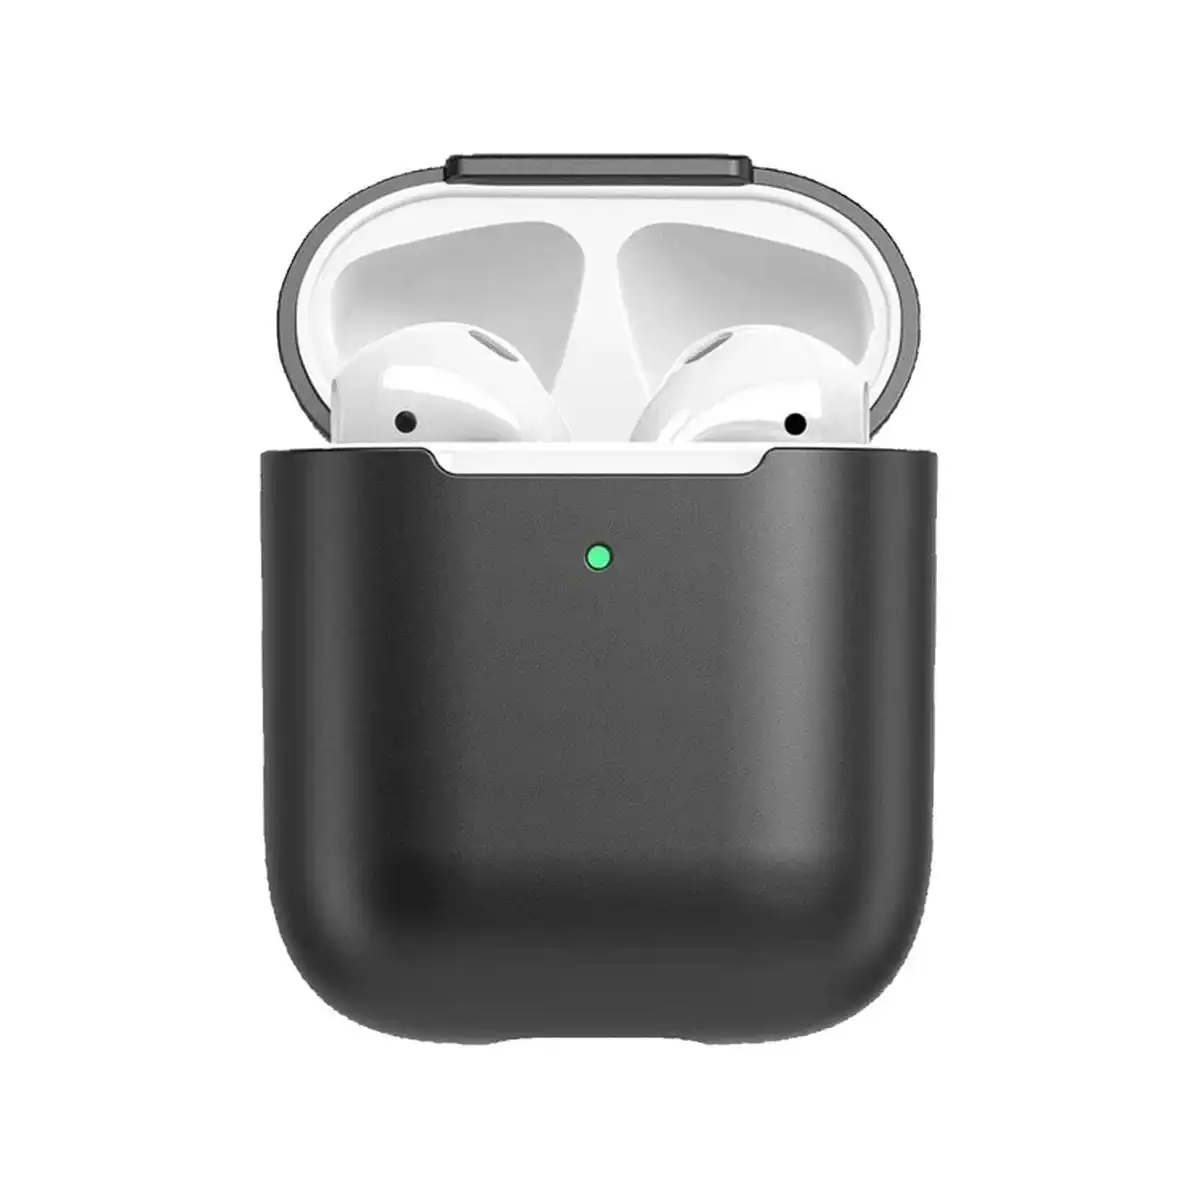 Tech21 Studio Colour Case for Apple AirPods - Black